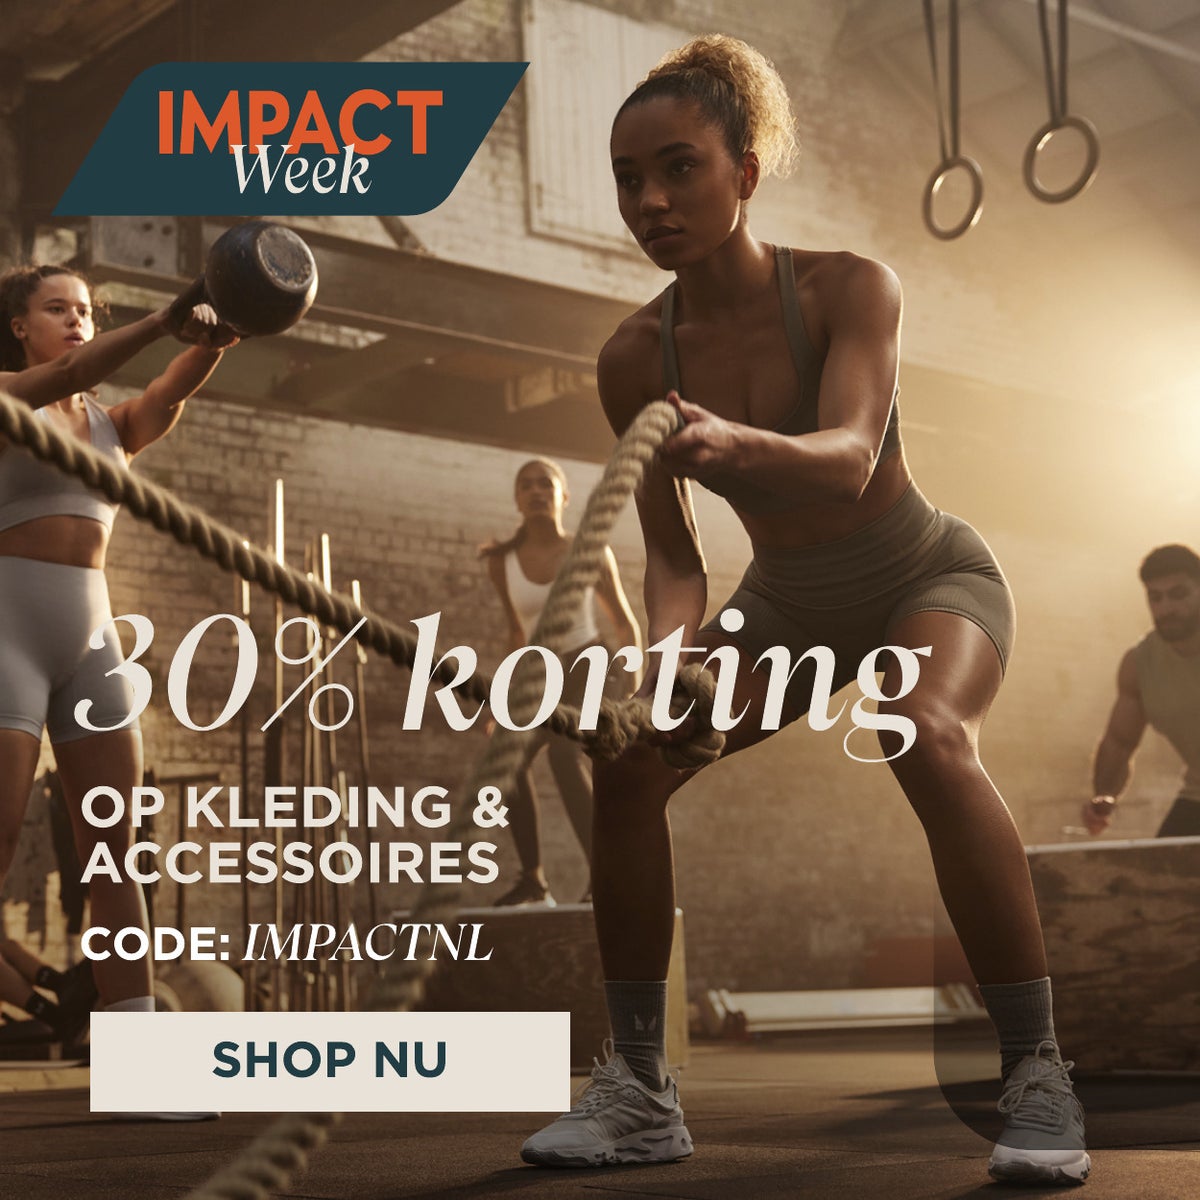 Impact Week - 30% Korting Op kleidung & accessoires -Code: IMAPCTNL